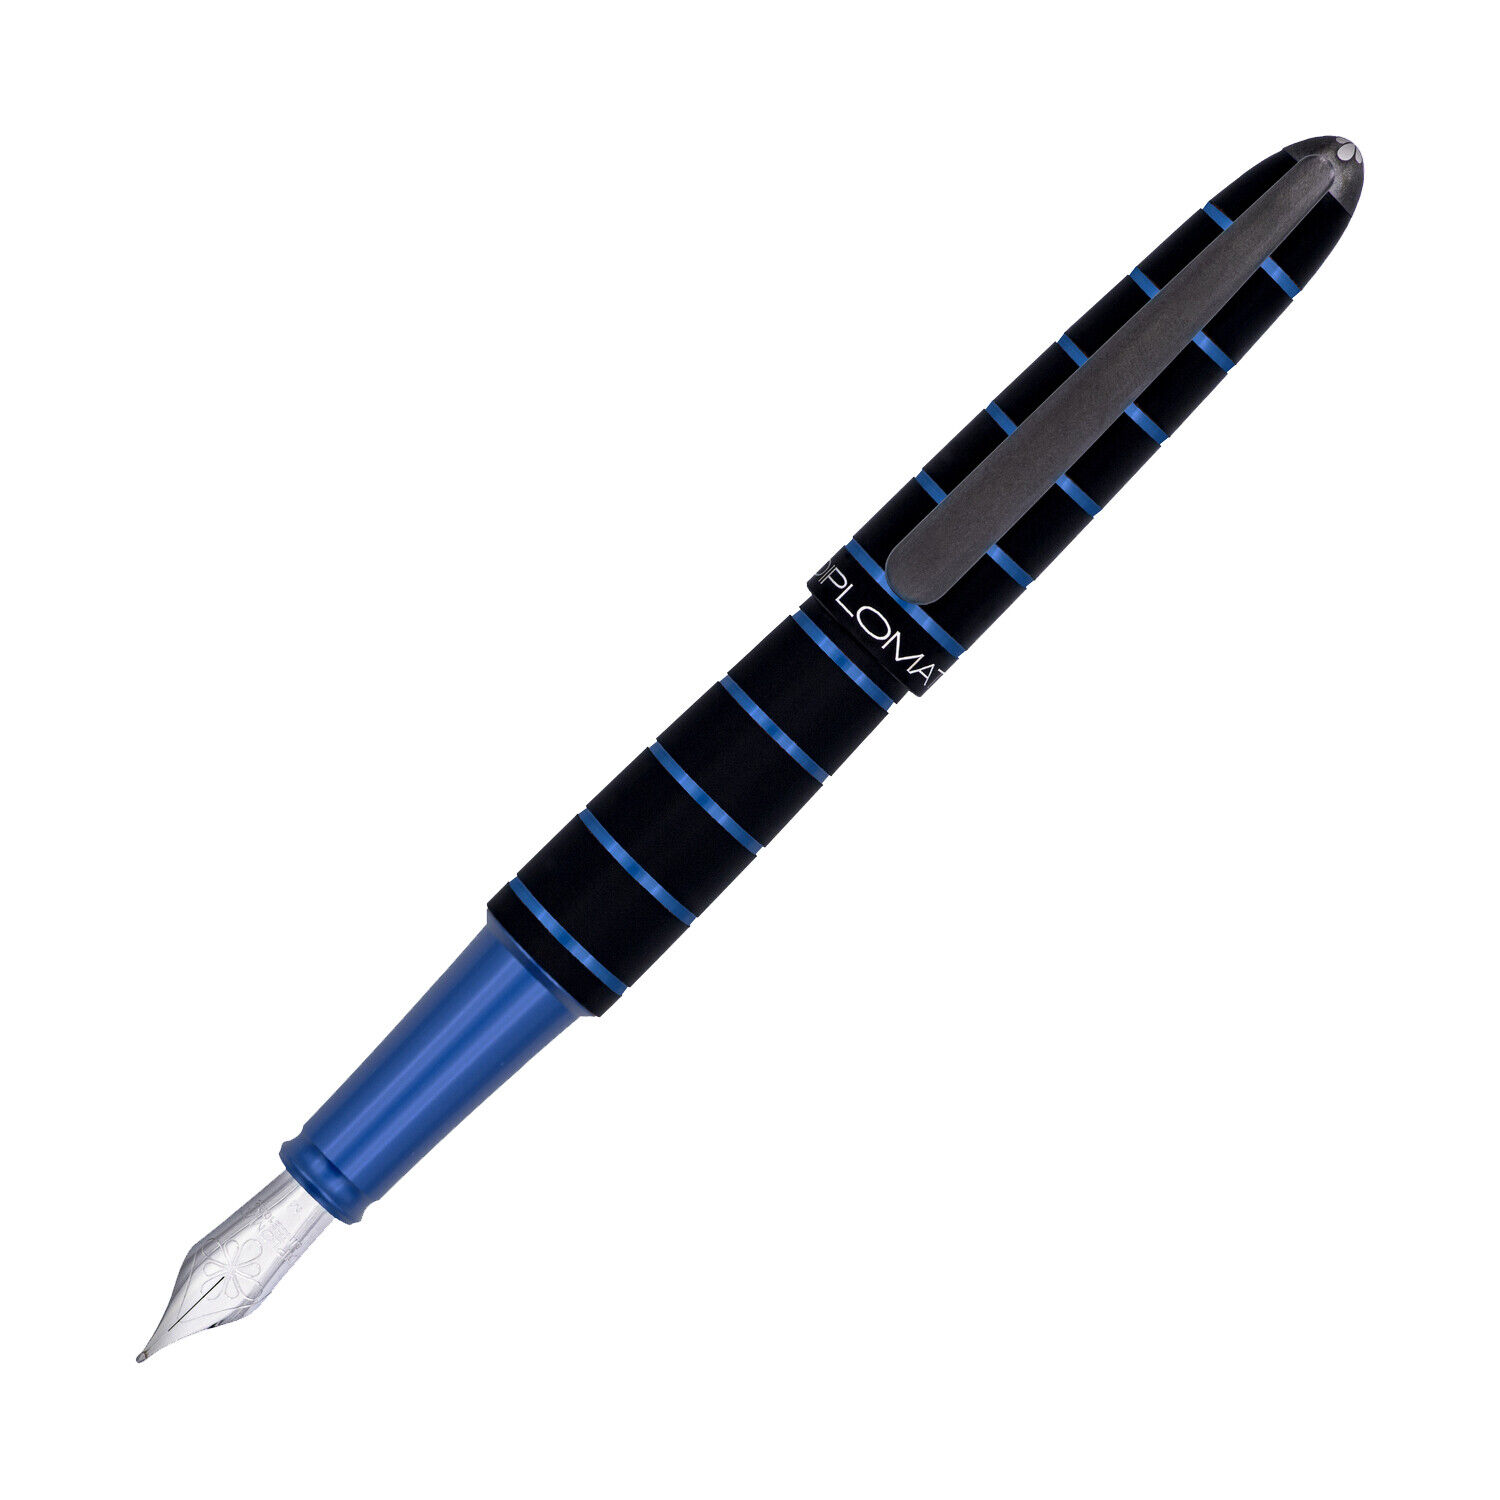 Diplomat Elox Fountain Pen in Ring Black/Blue - Medium Point- NEW in Box